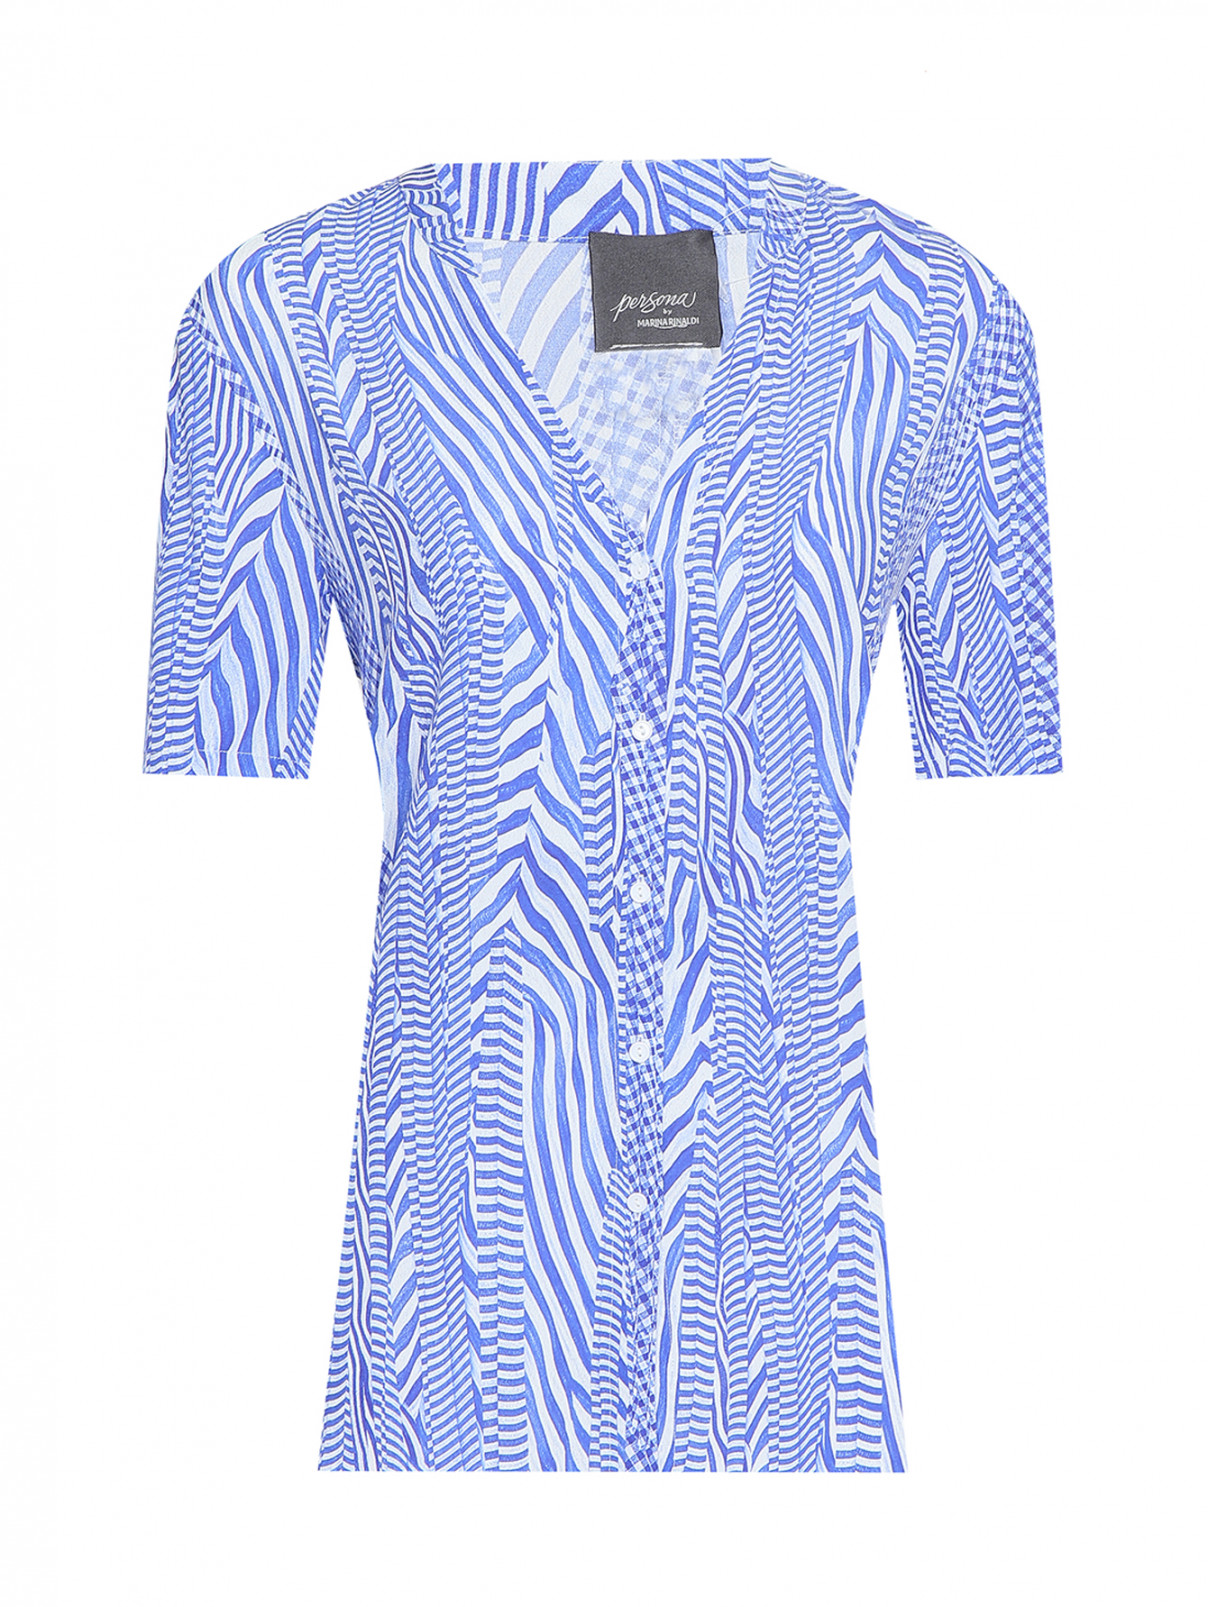 Рубашка из вискозы с узором и коротким рукавом Persona by Marina Rinaldi  –  Общий вид  – Цвет:  Узор